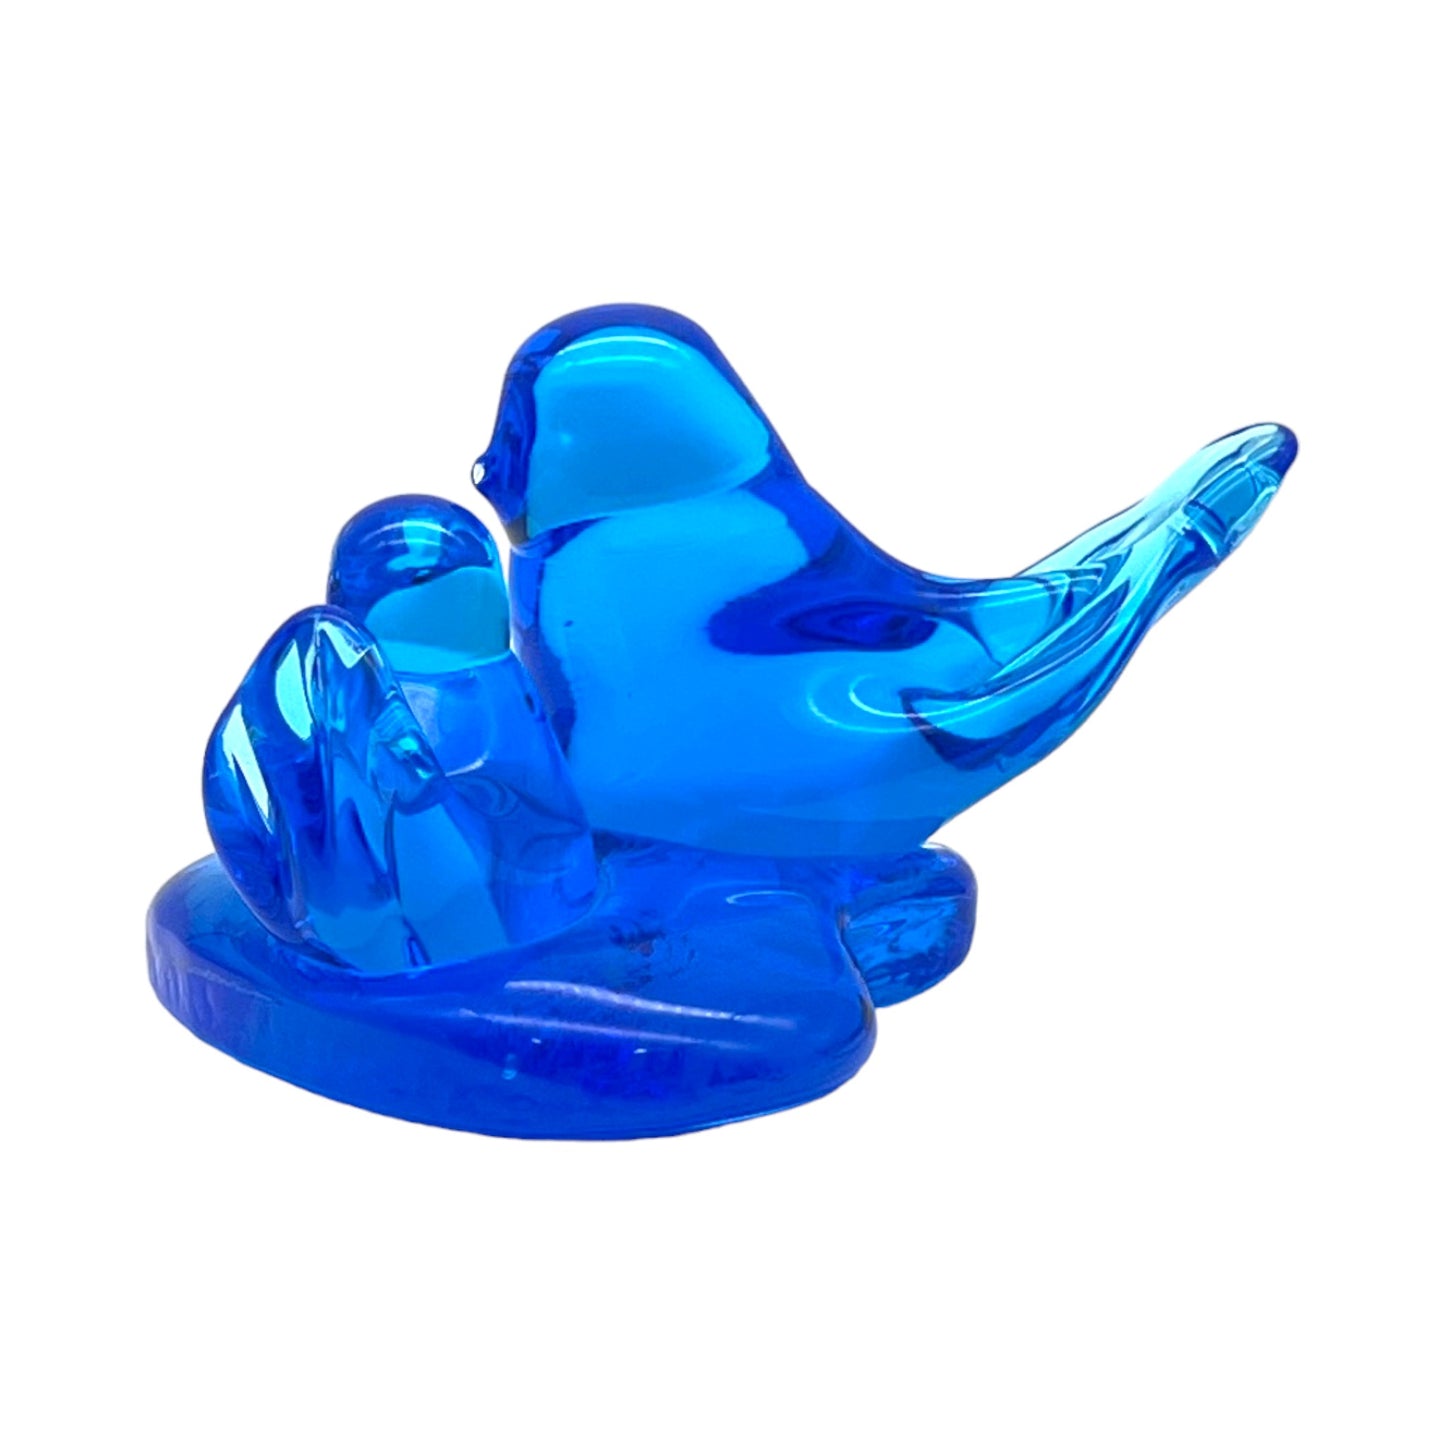 Blown Art Glass - Double Bluebird Of Happiness - Leo Ward Signed - 1993 - 3"